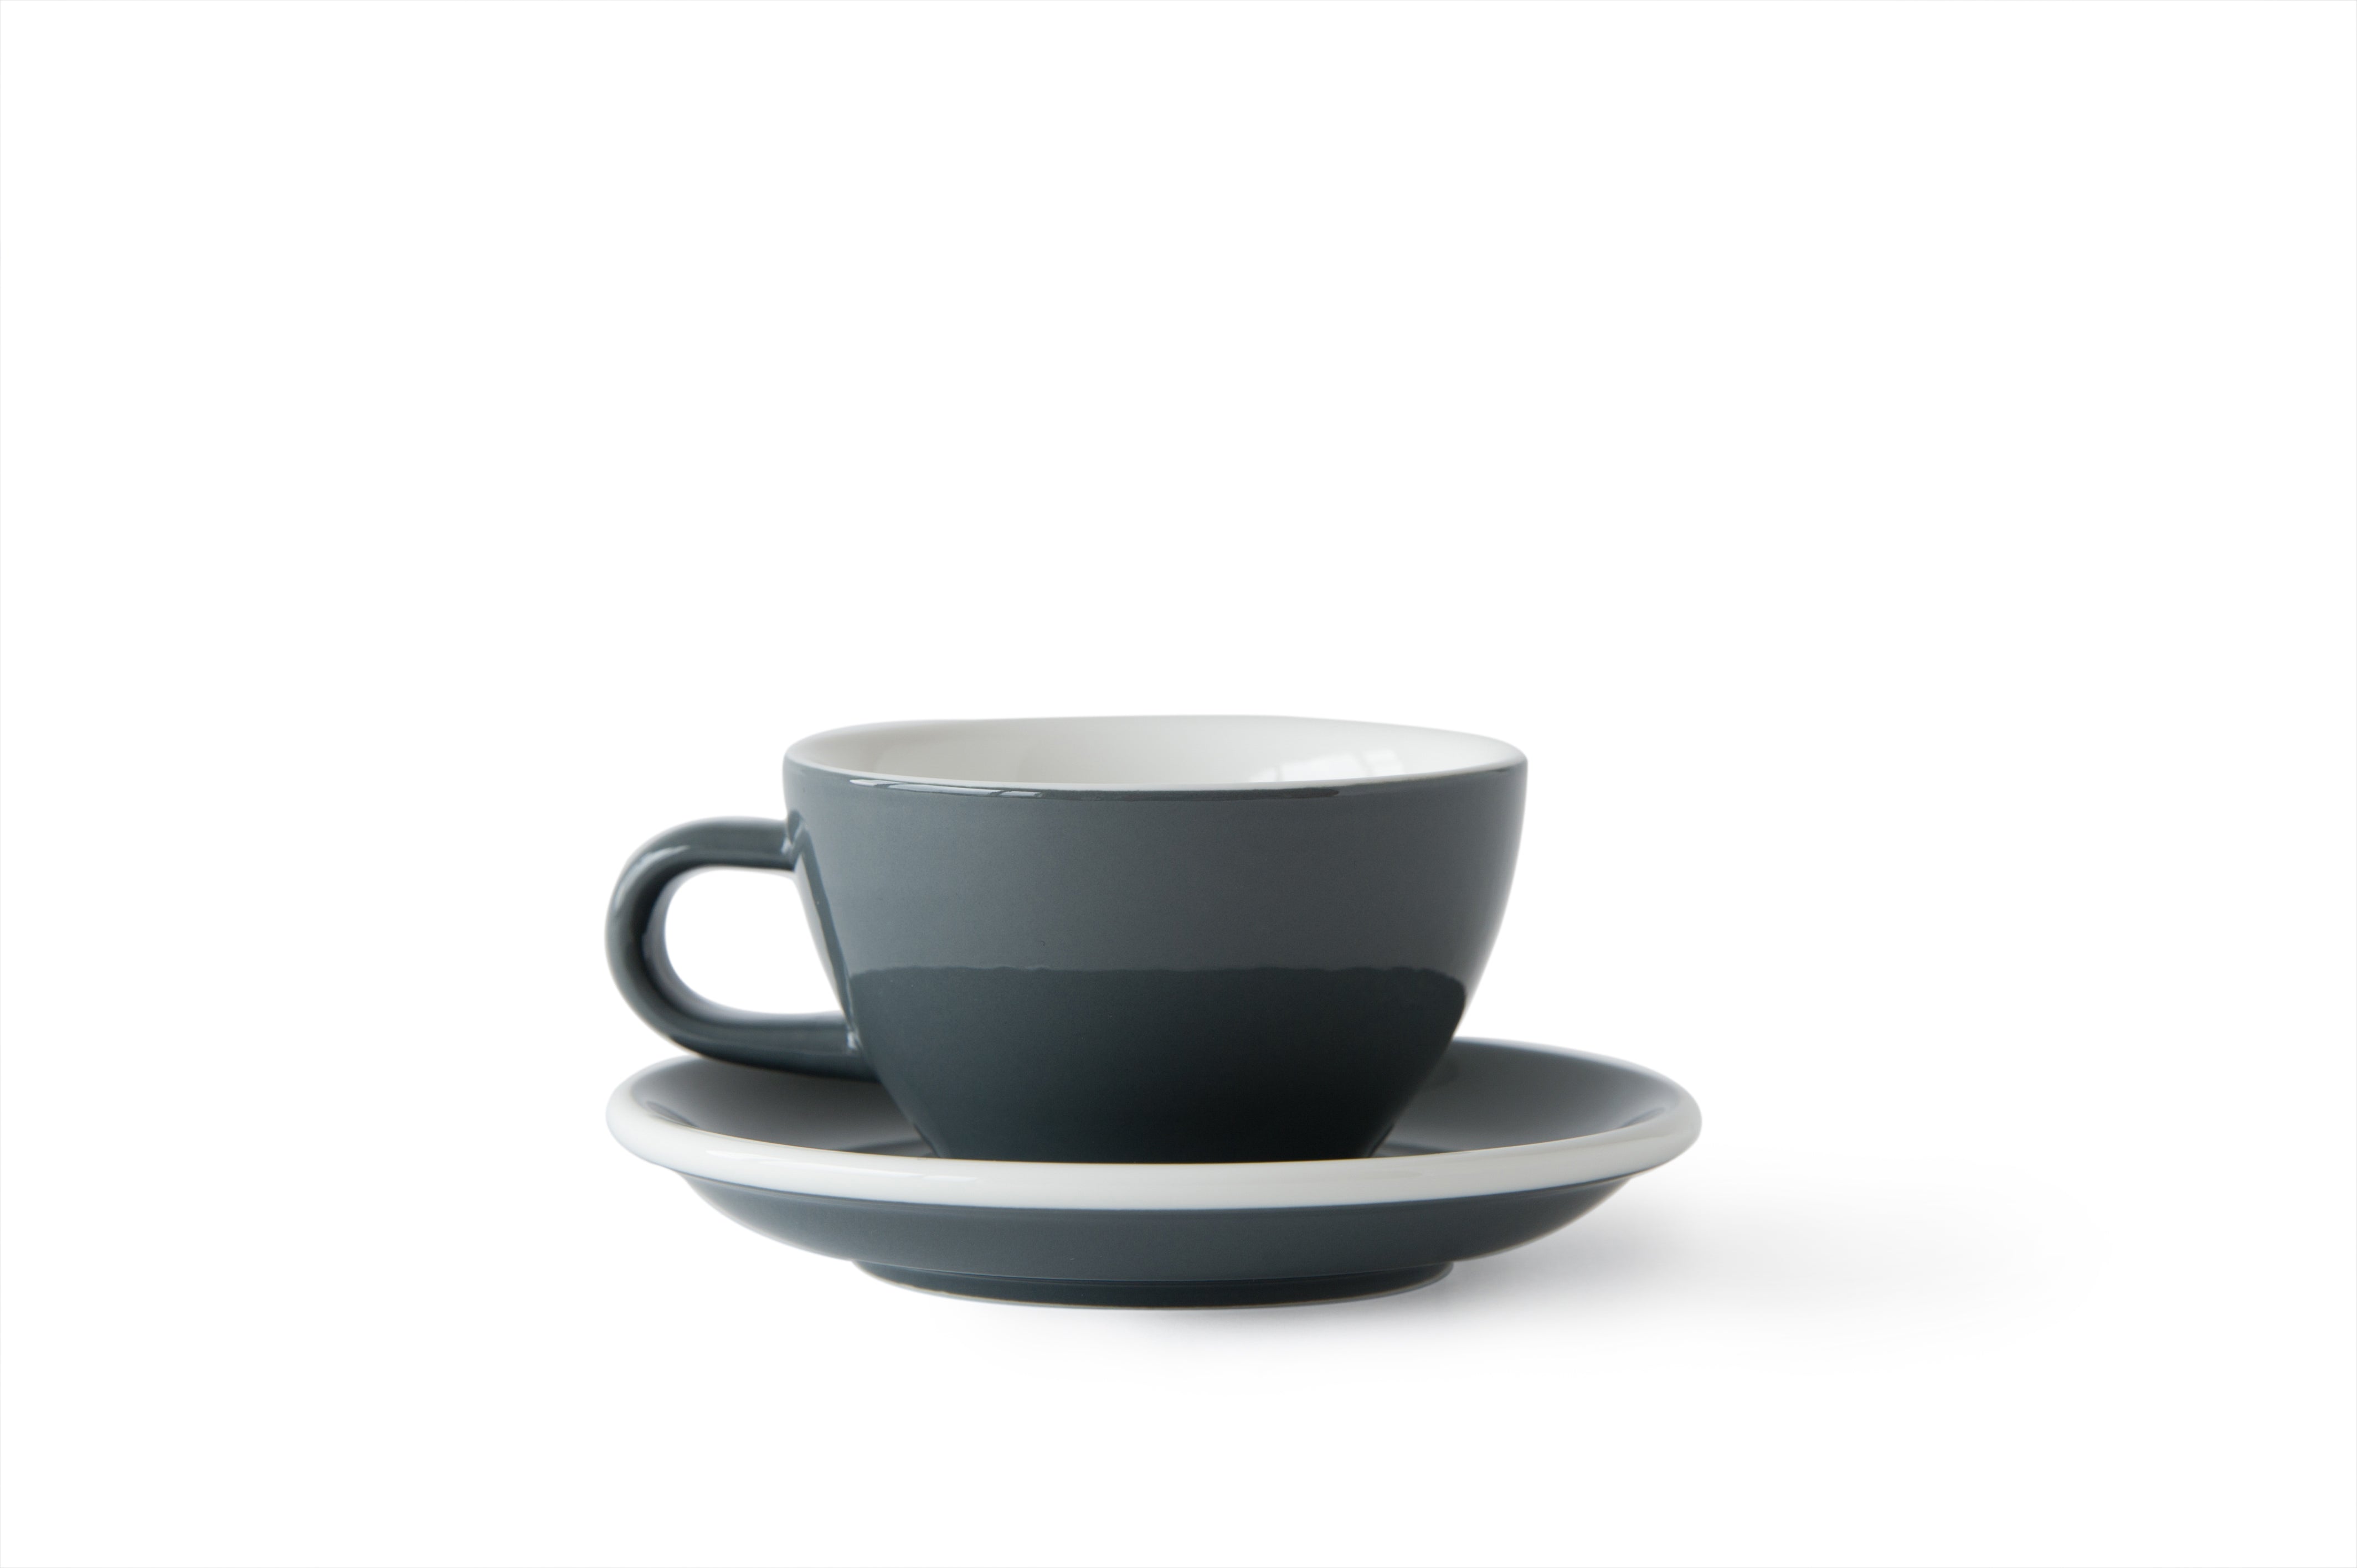 ACME Espresso Range Cappuccino Cup 190ml and Saucer 14cm Set